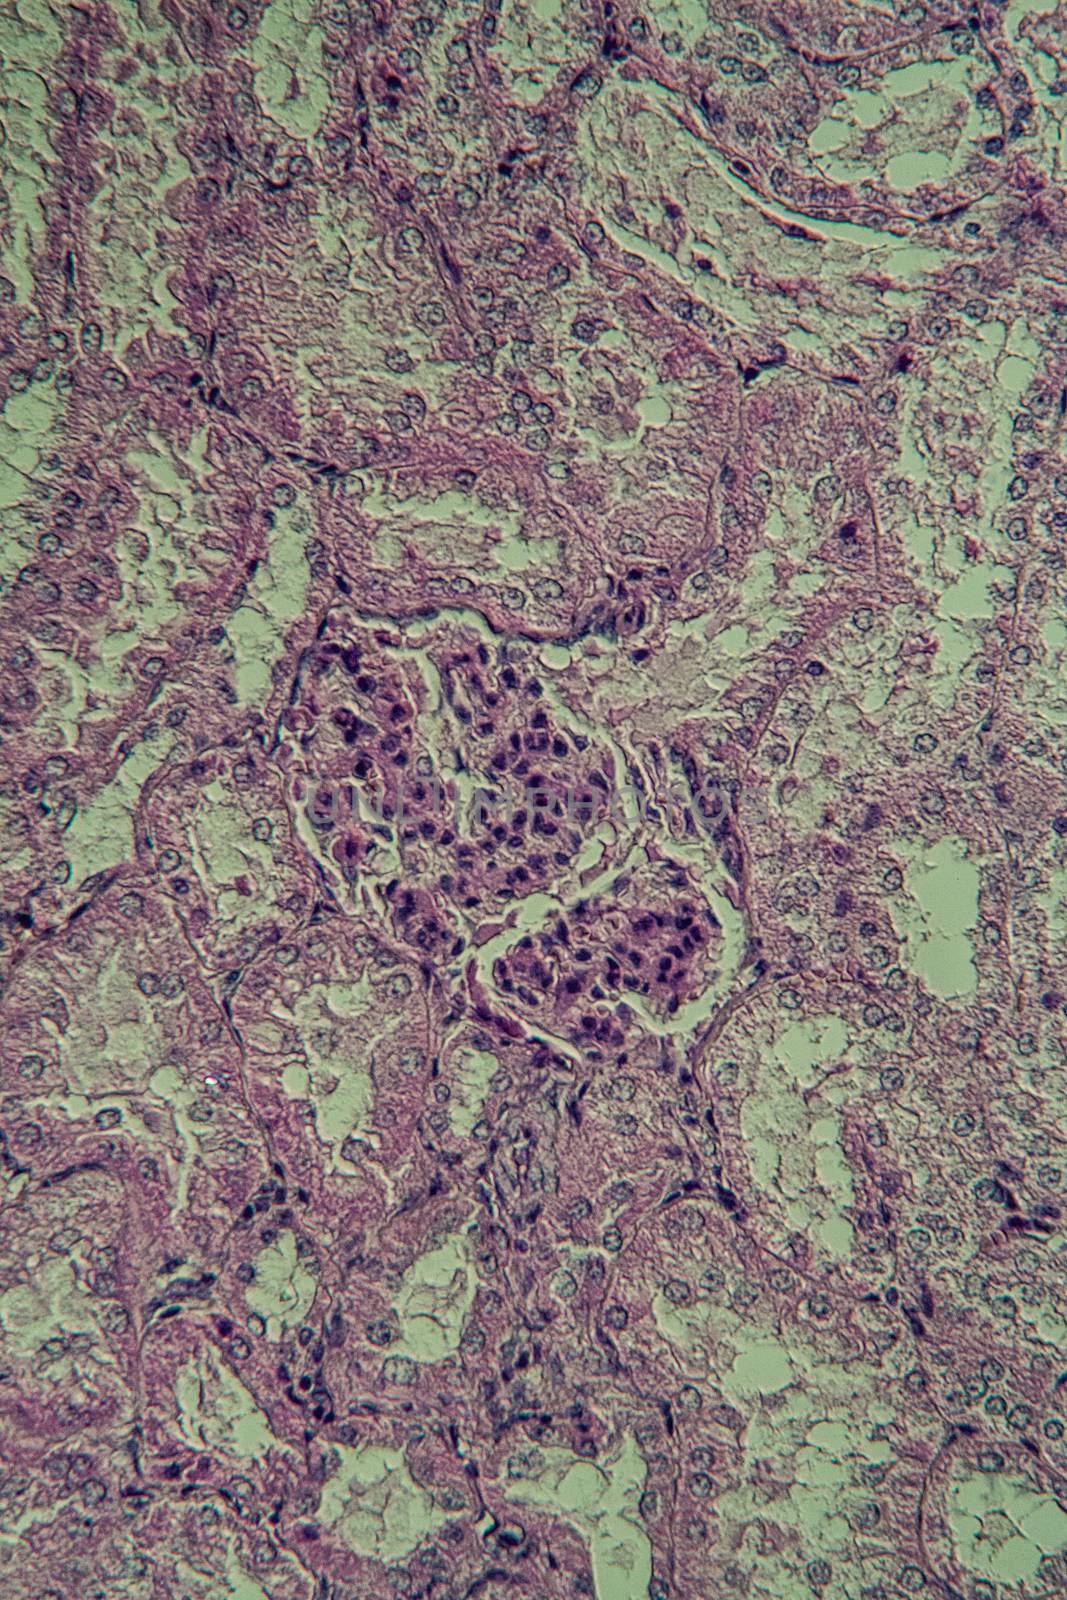 Cross section of the kidney with Glumeroli 200x